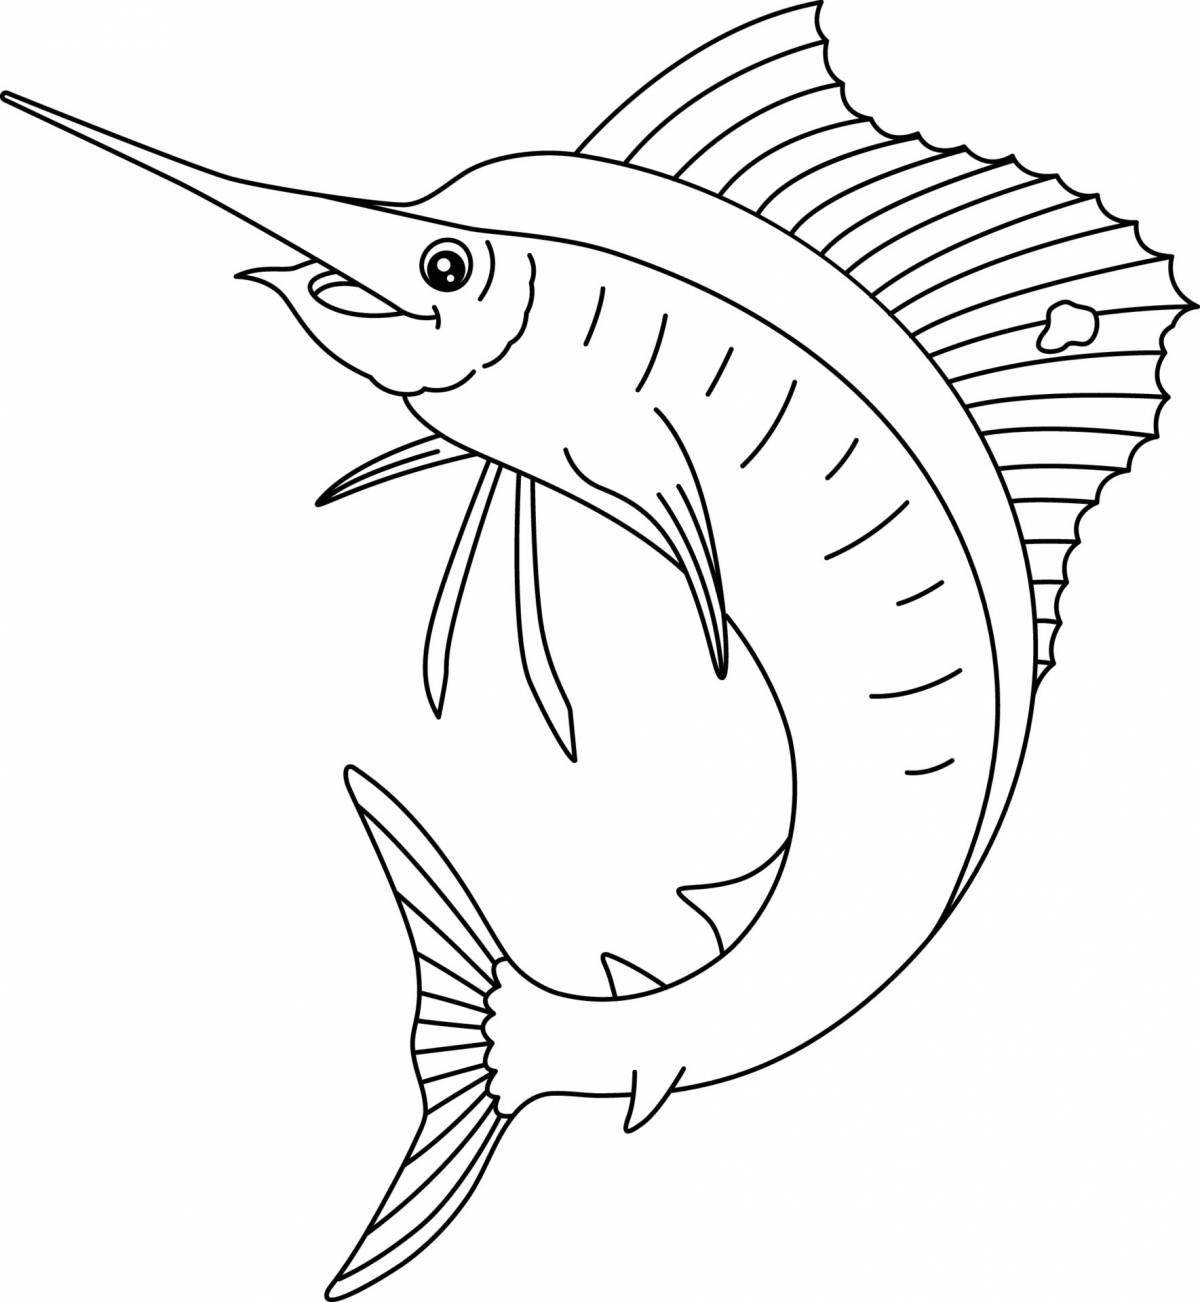 Playful swordfish coloring page